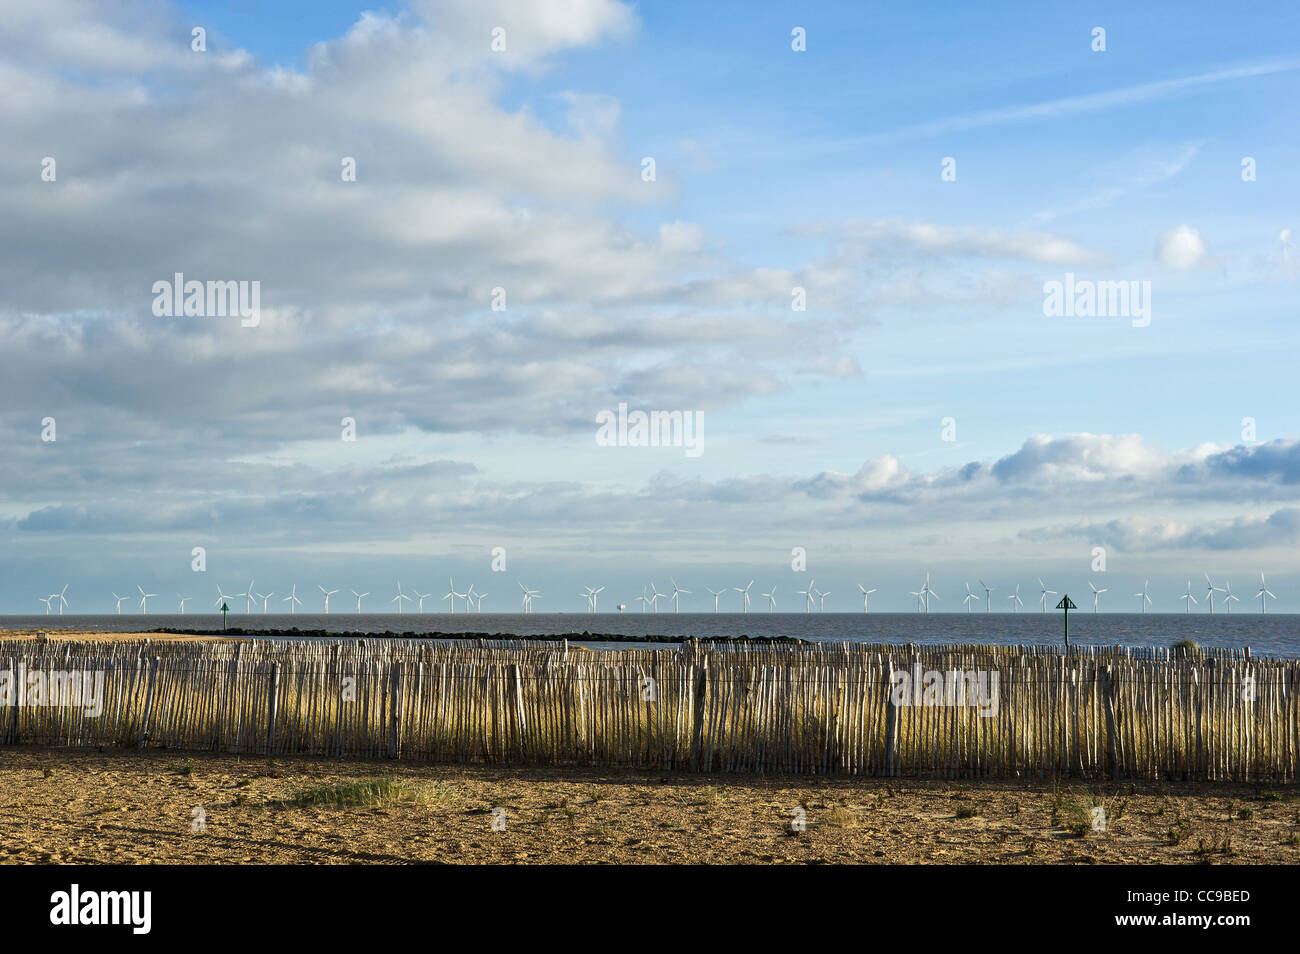 Chestnut paling scherma su una spiaggia sulla costa di Essex Foto Stock